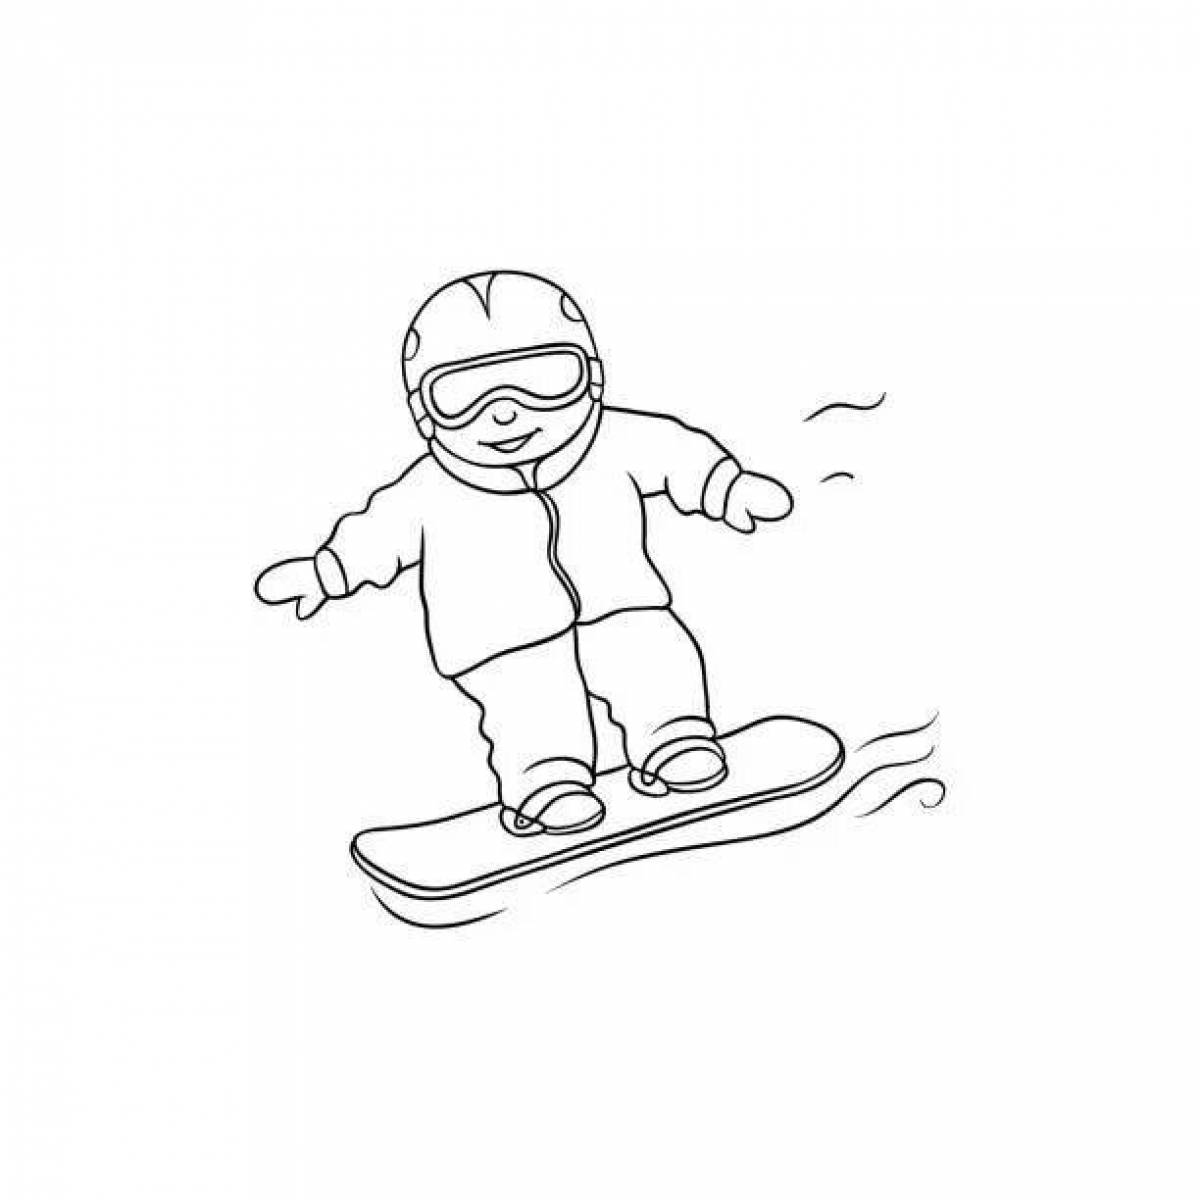 Adventure snowboard coloring book